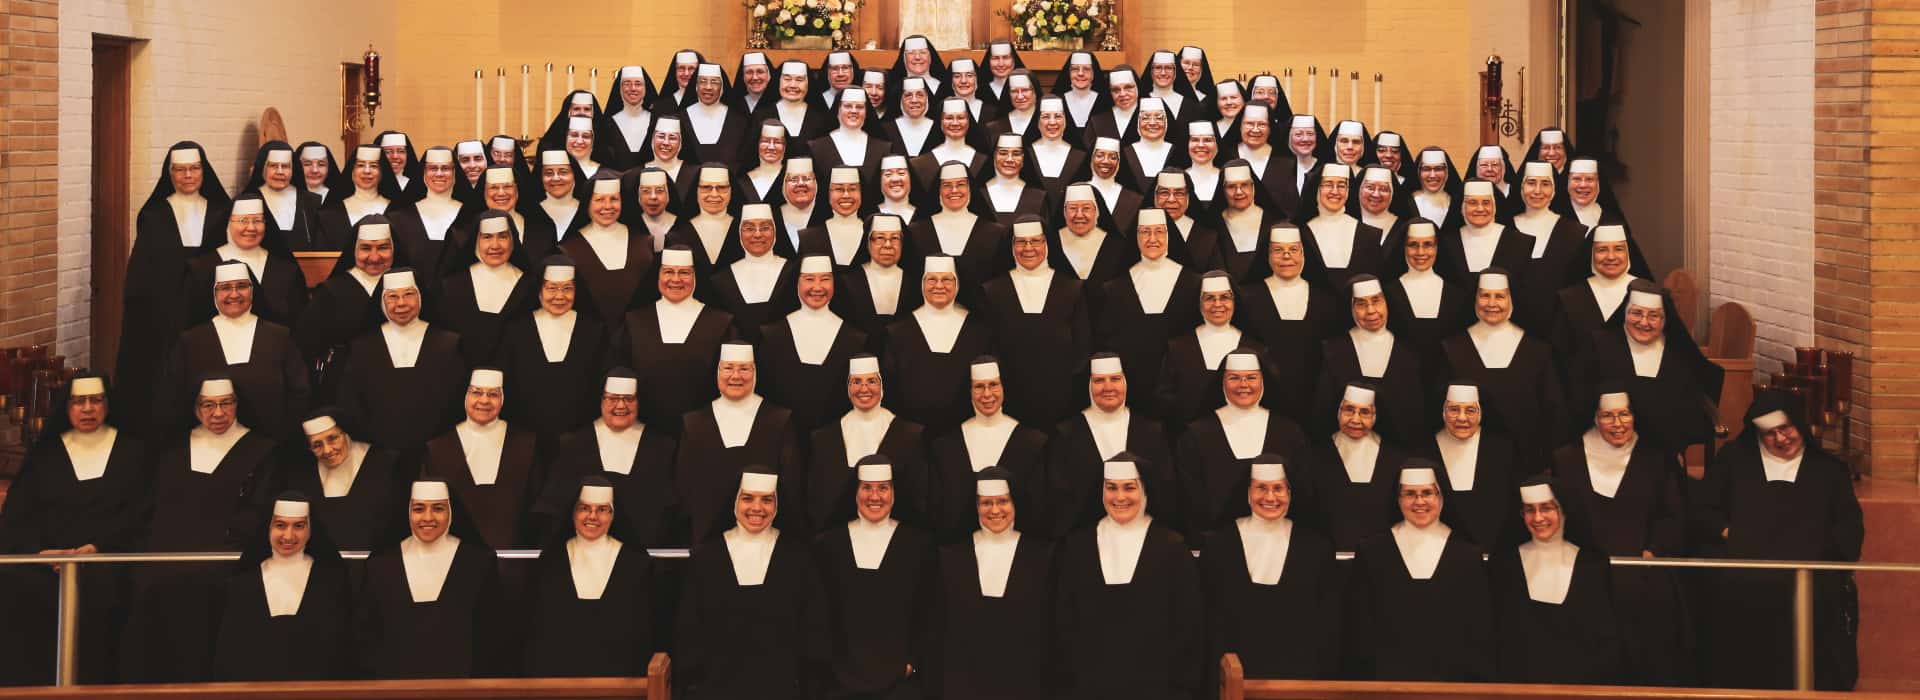 Carmelite Sisters Community Photo